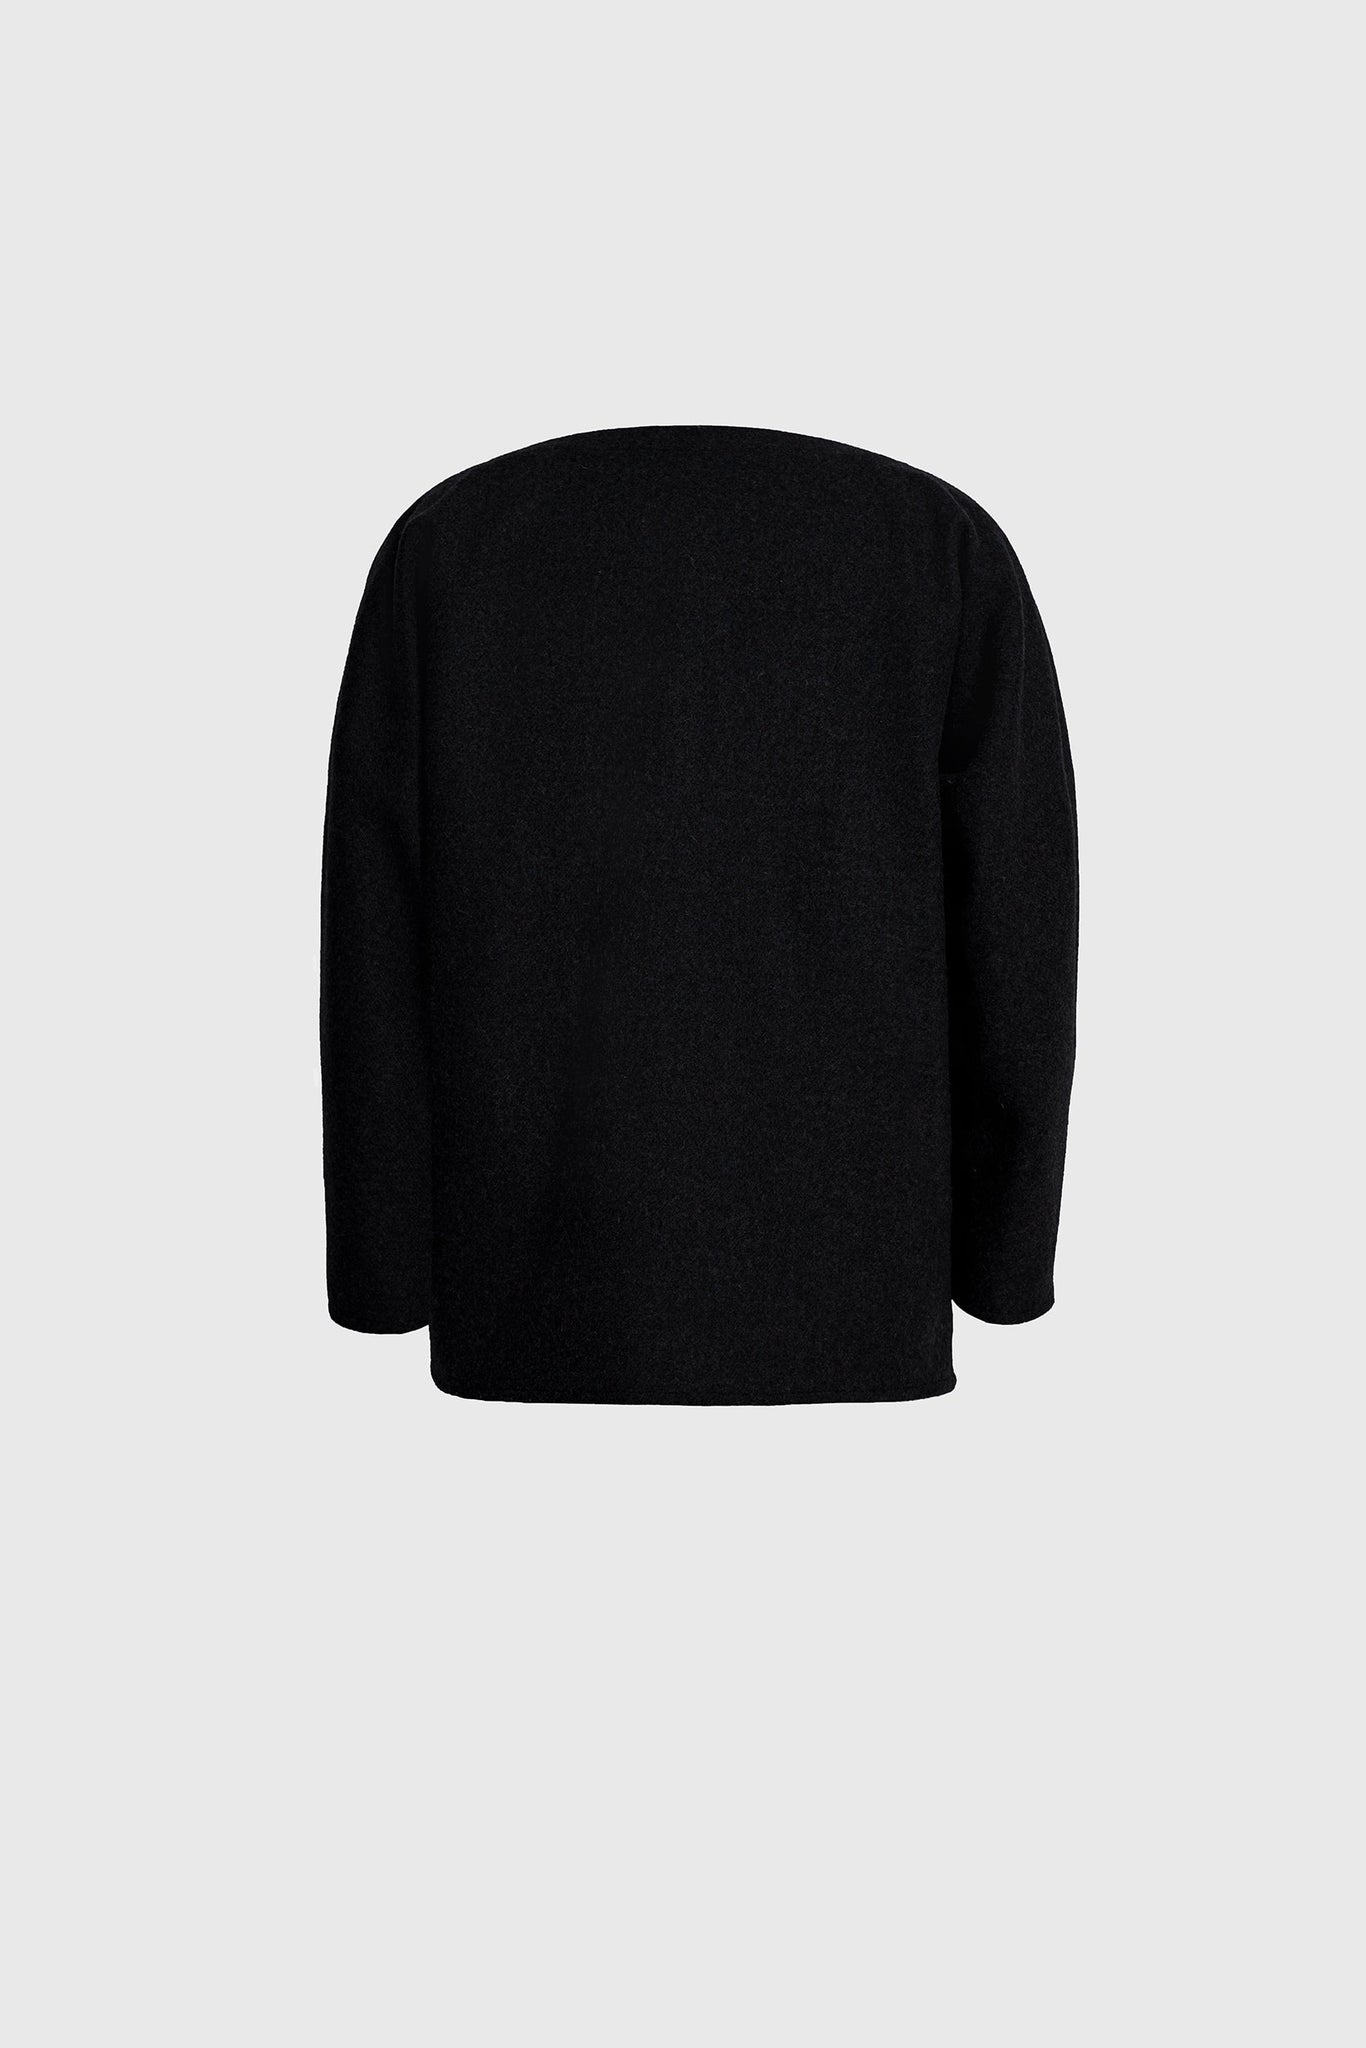 Black Sweater - Men's